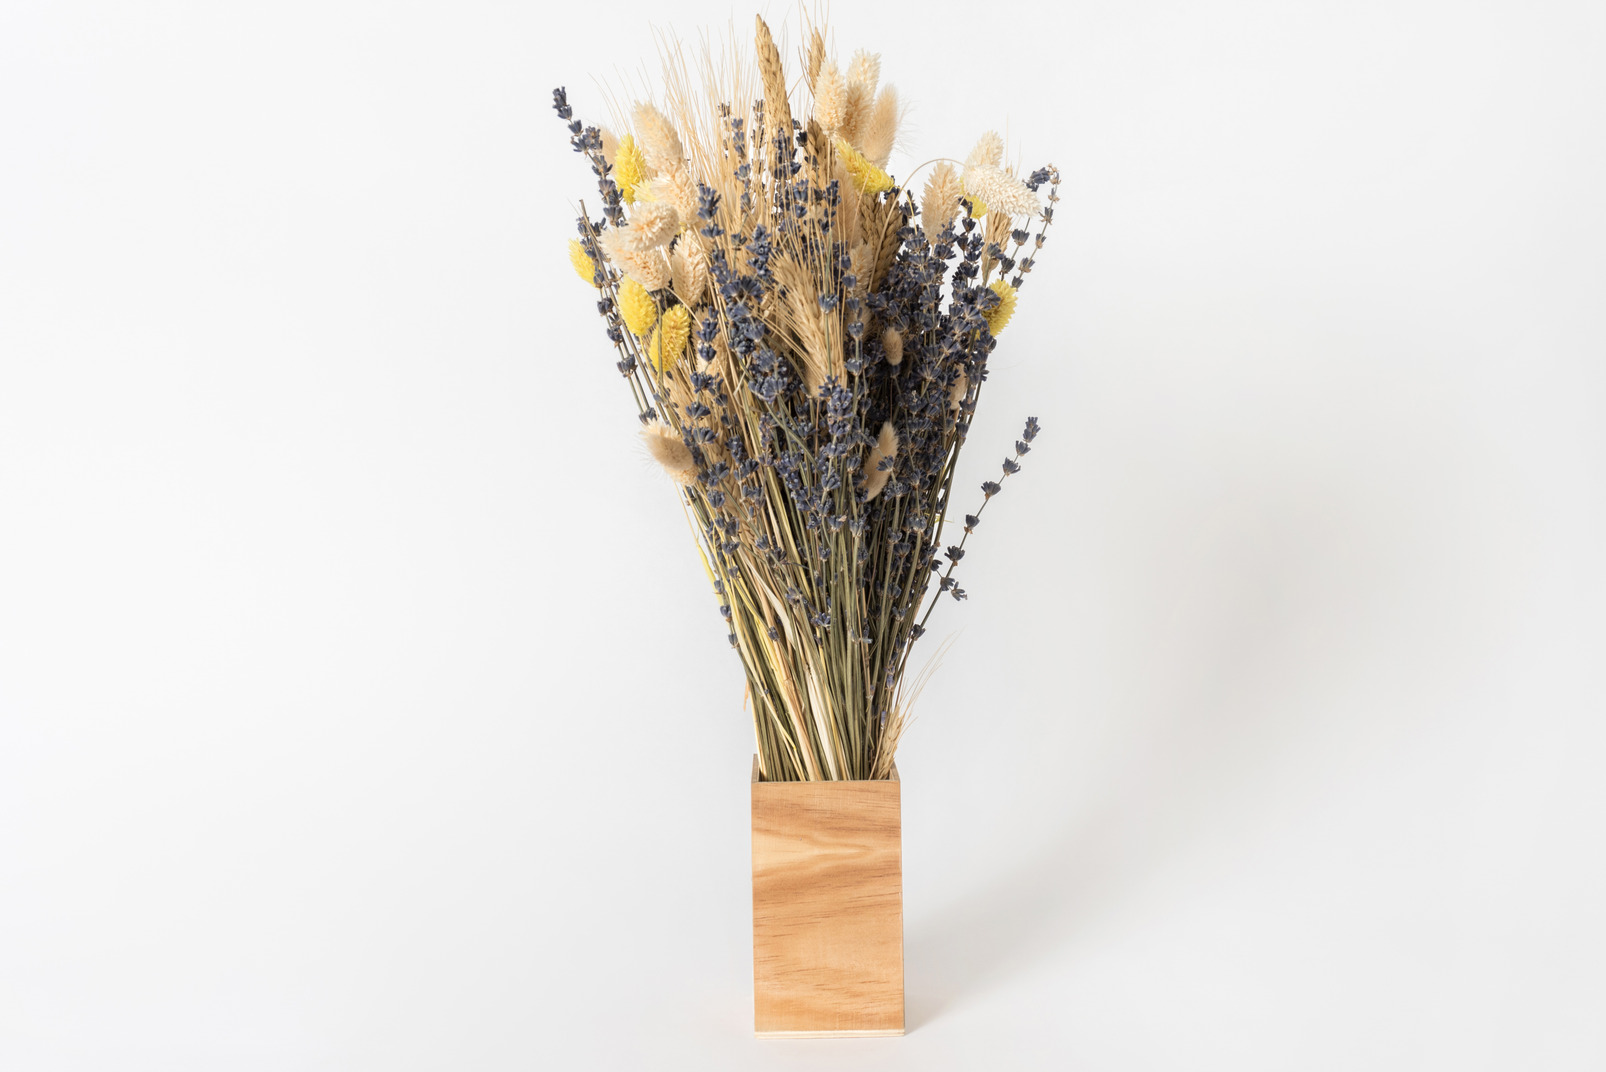 Dried flowers in wooden vase